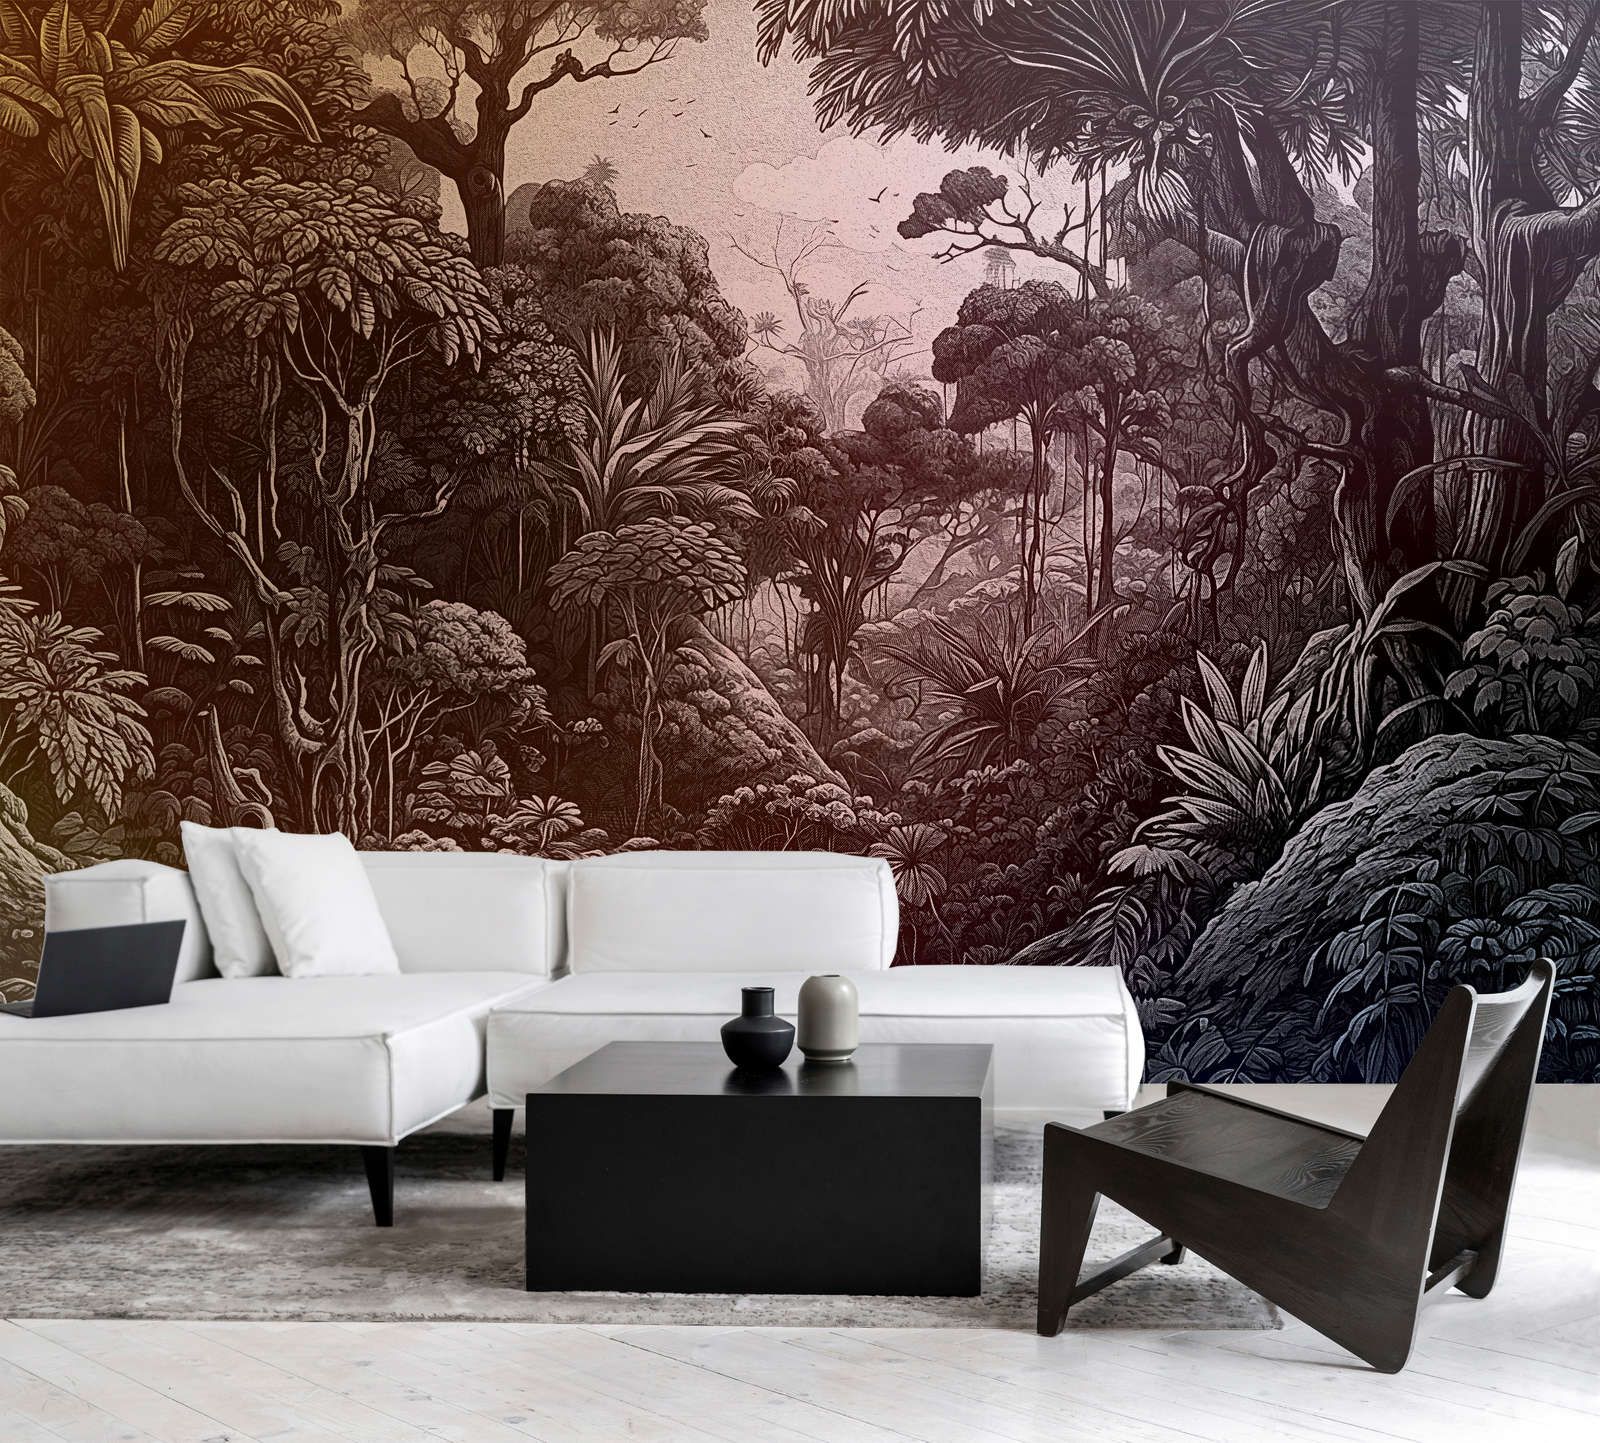             Photo wallpaper »liana« - Jungle design with colour gradient - orange, violet, grey-green | Smooth, slightly shiny premium non-woven fabric
        